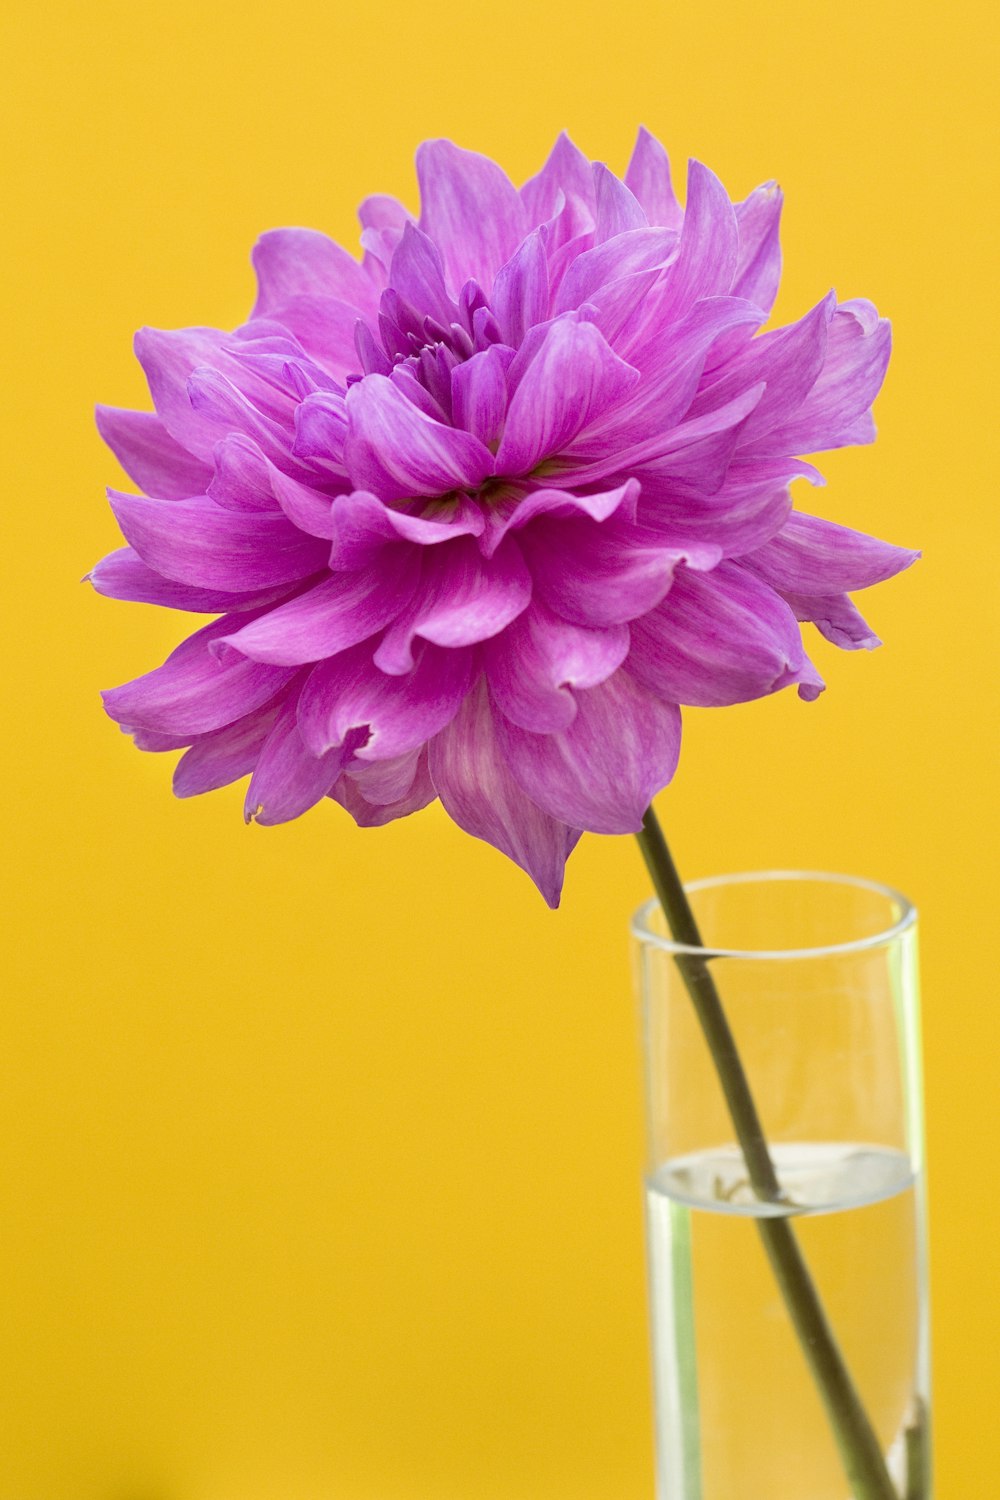 a purple flower in a glass of water